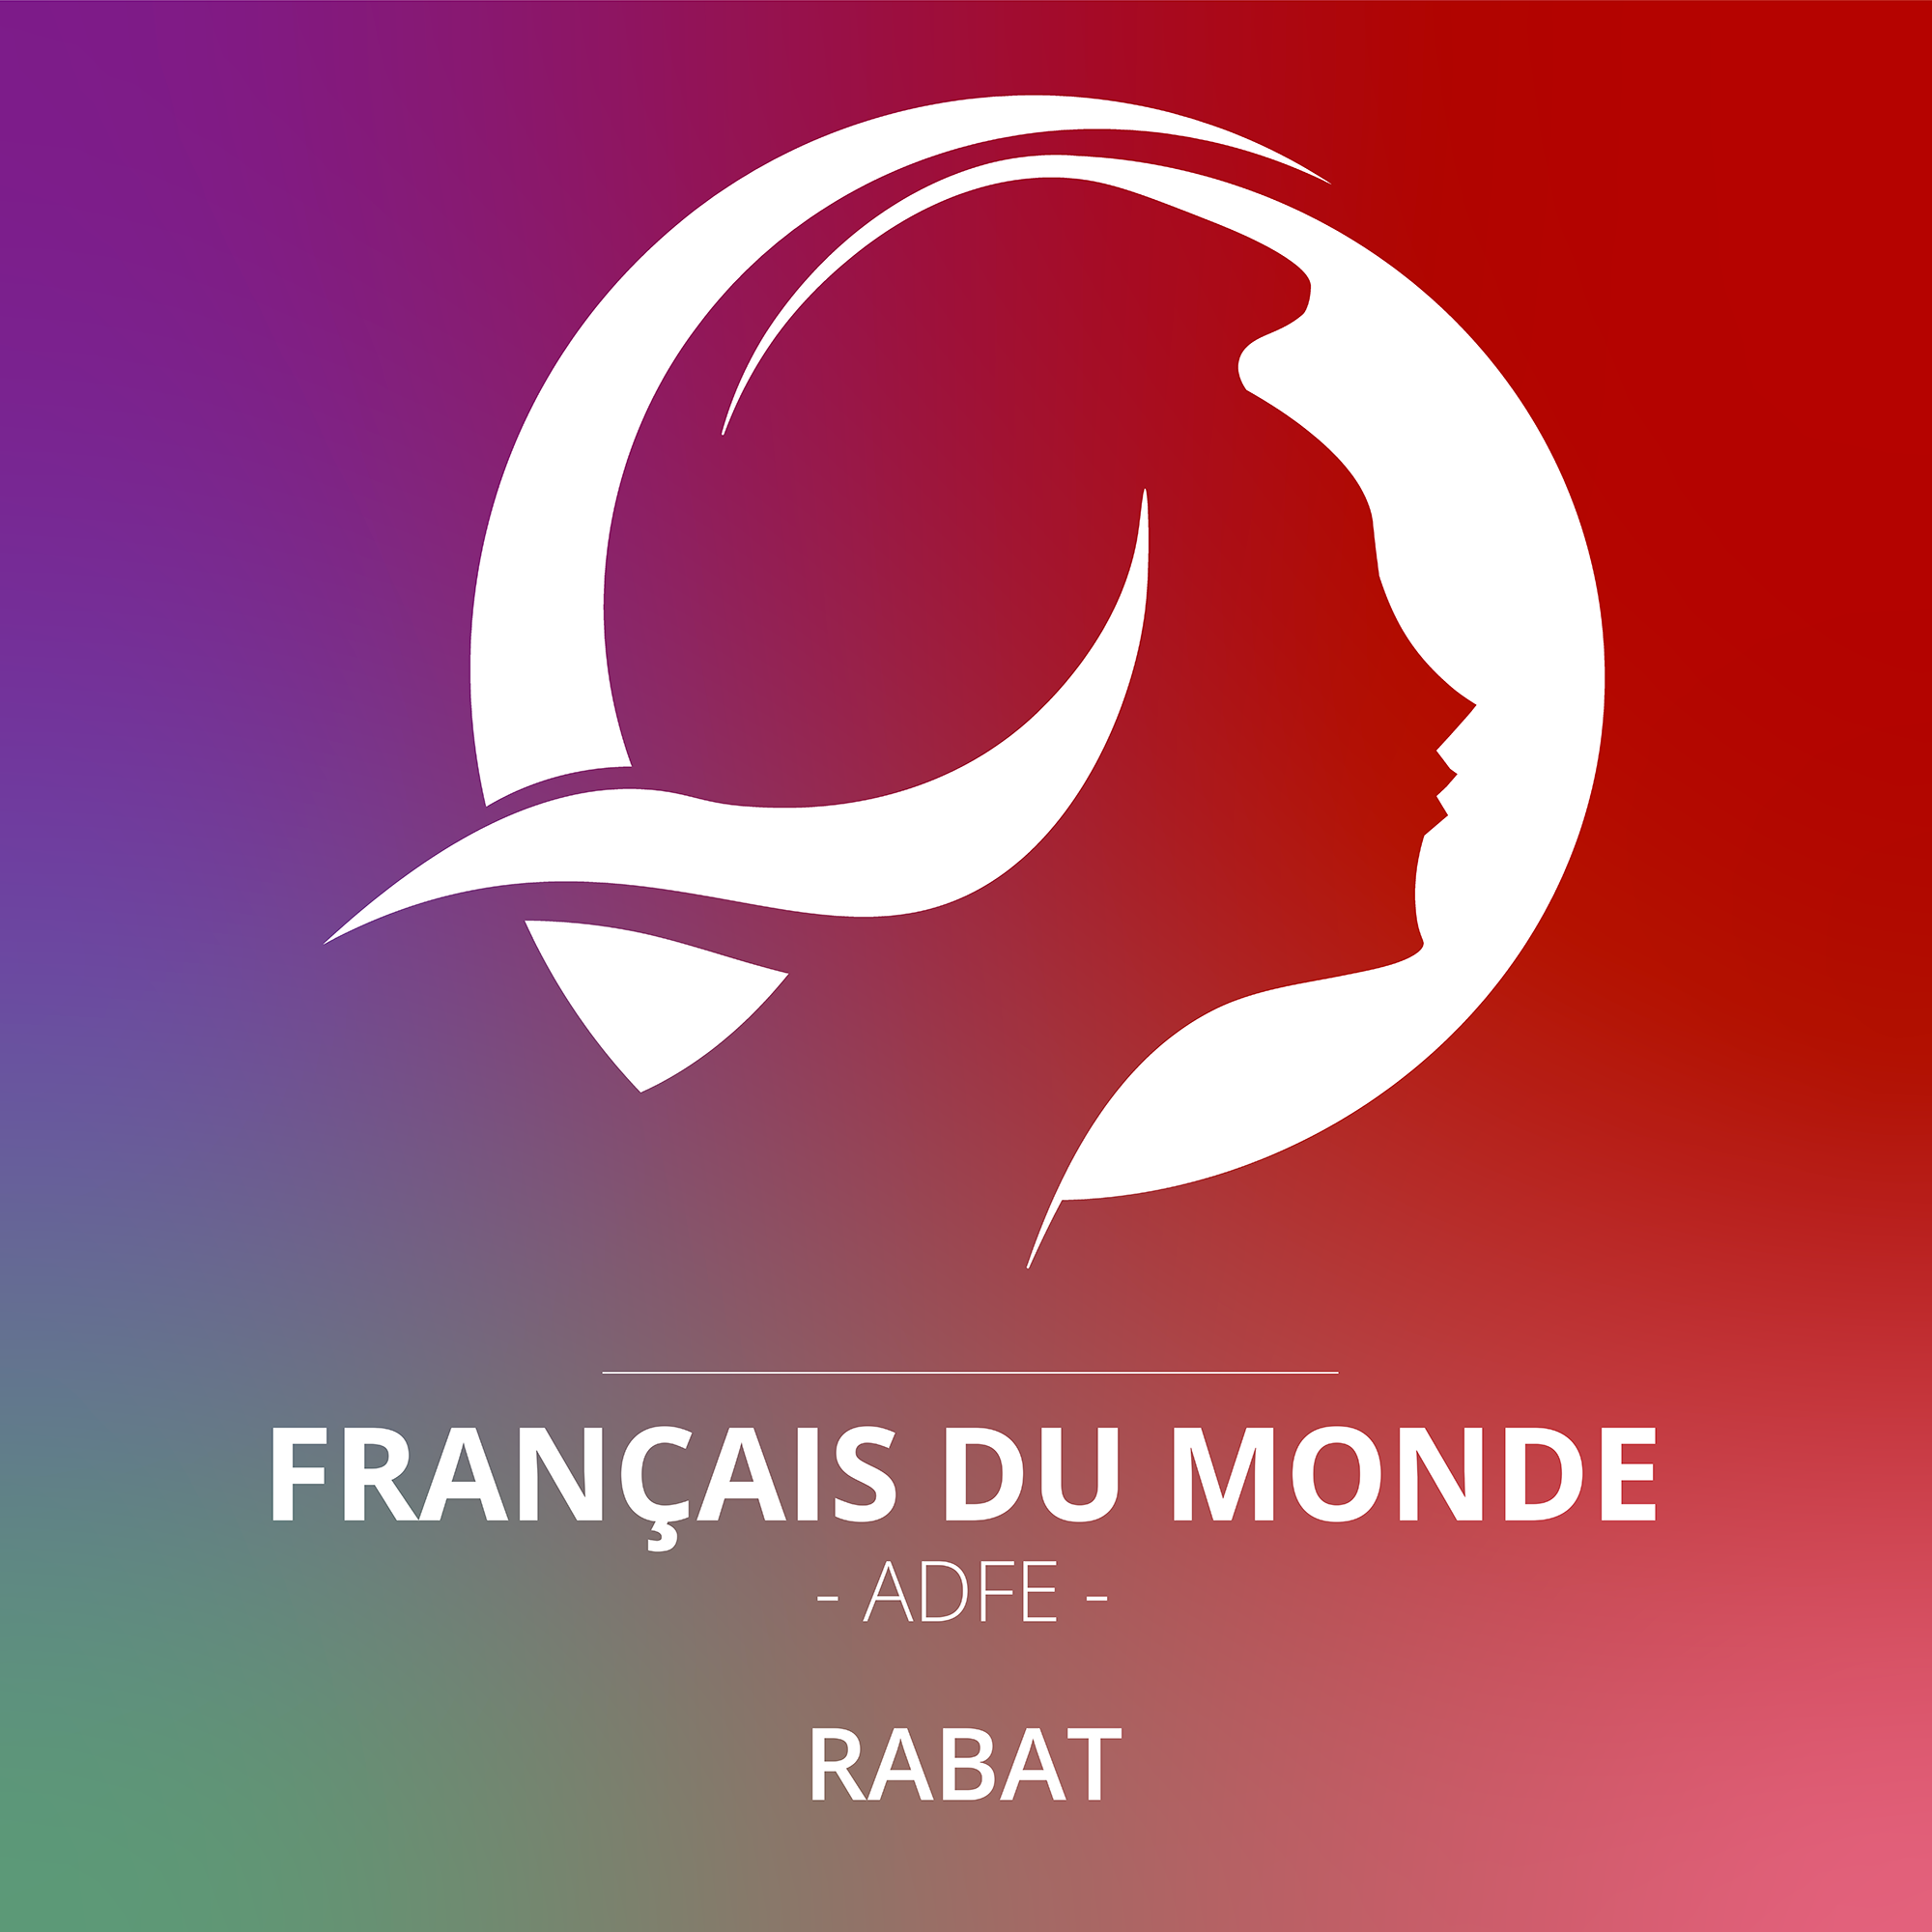 Français du monde - ADFE Rabat